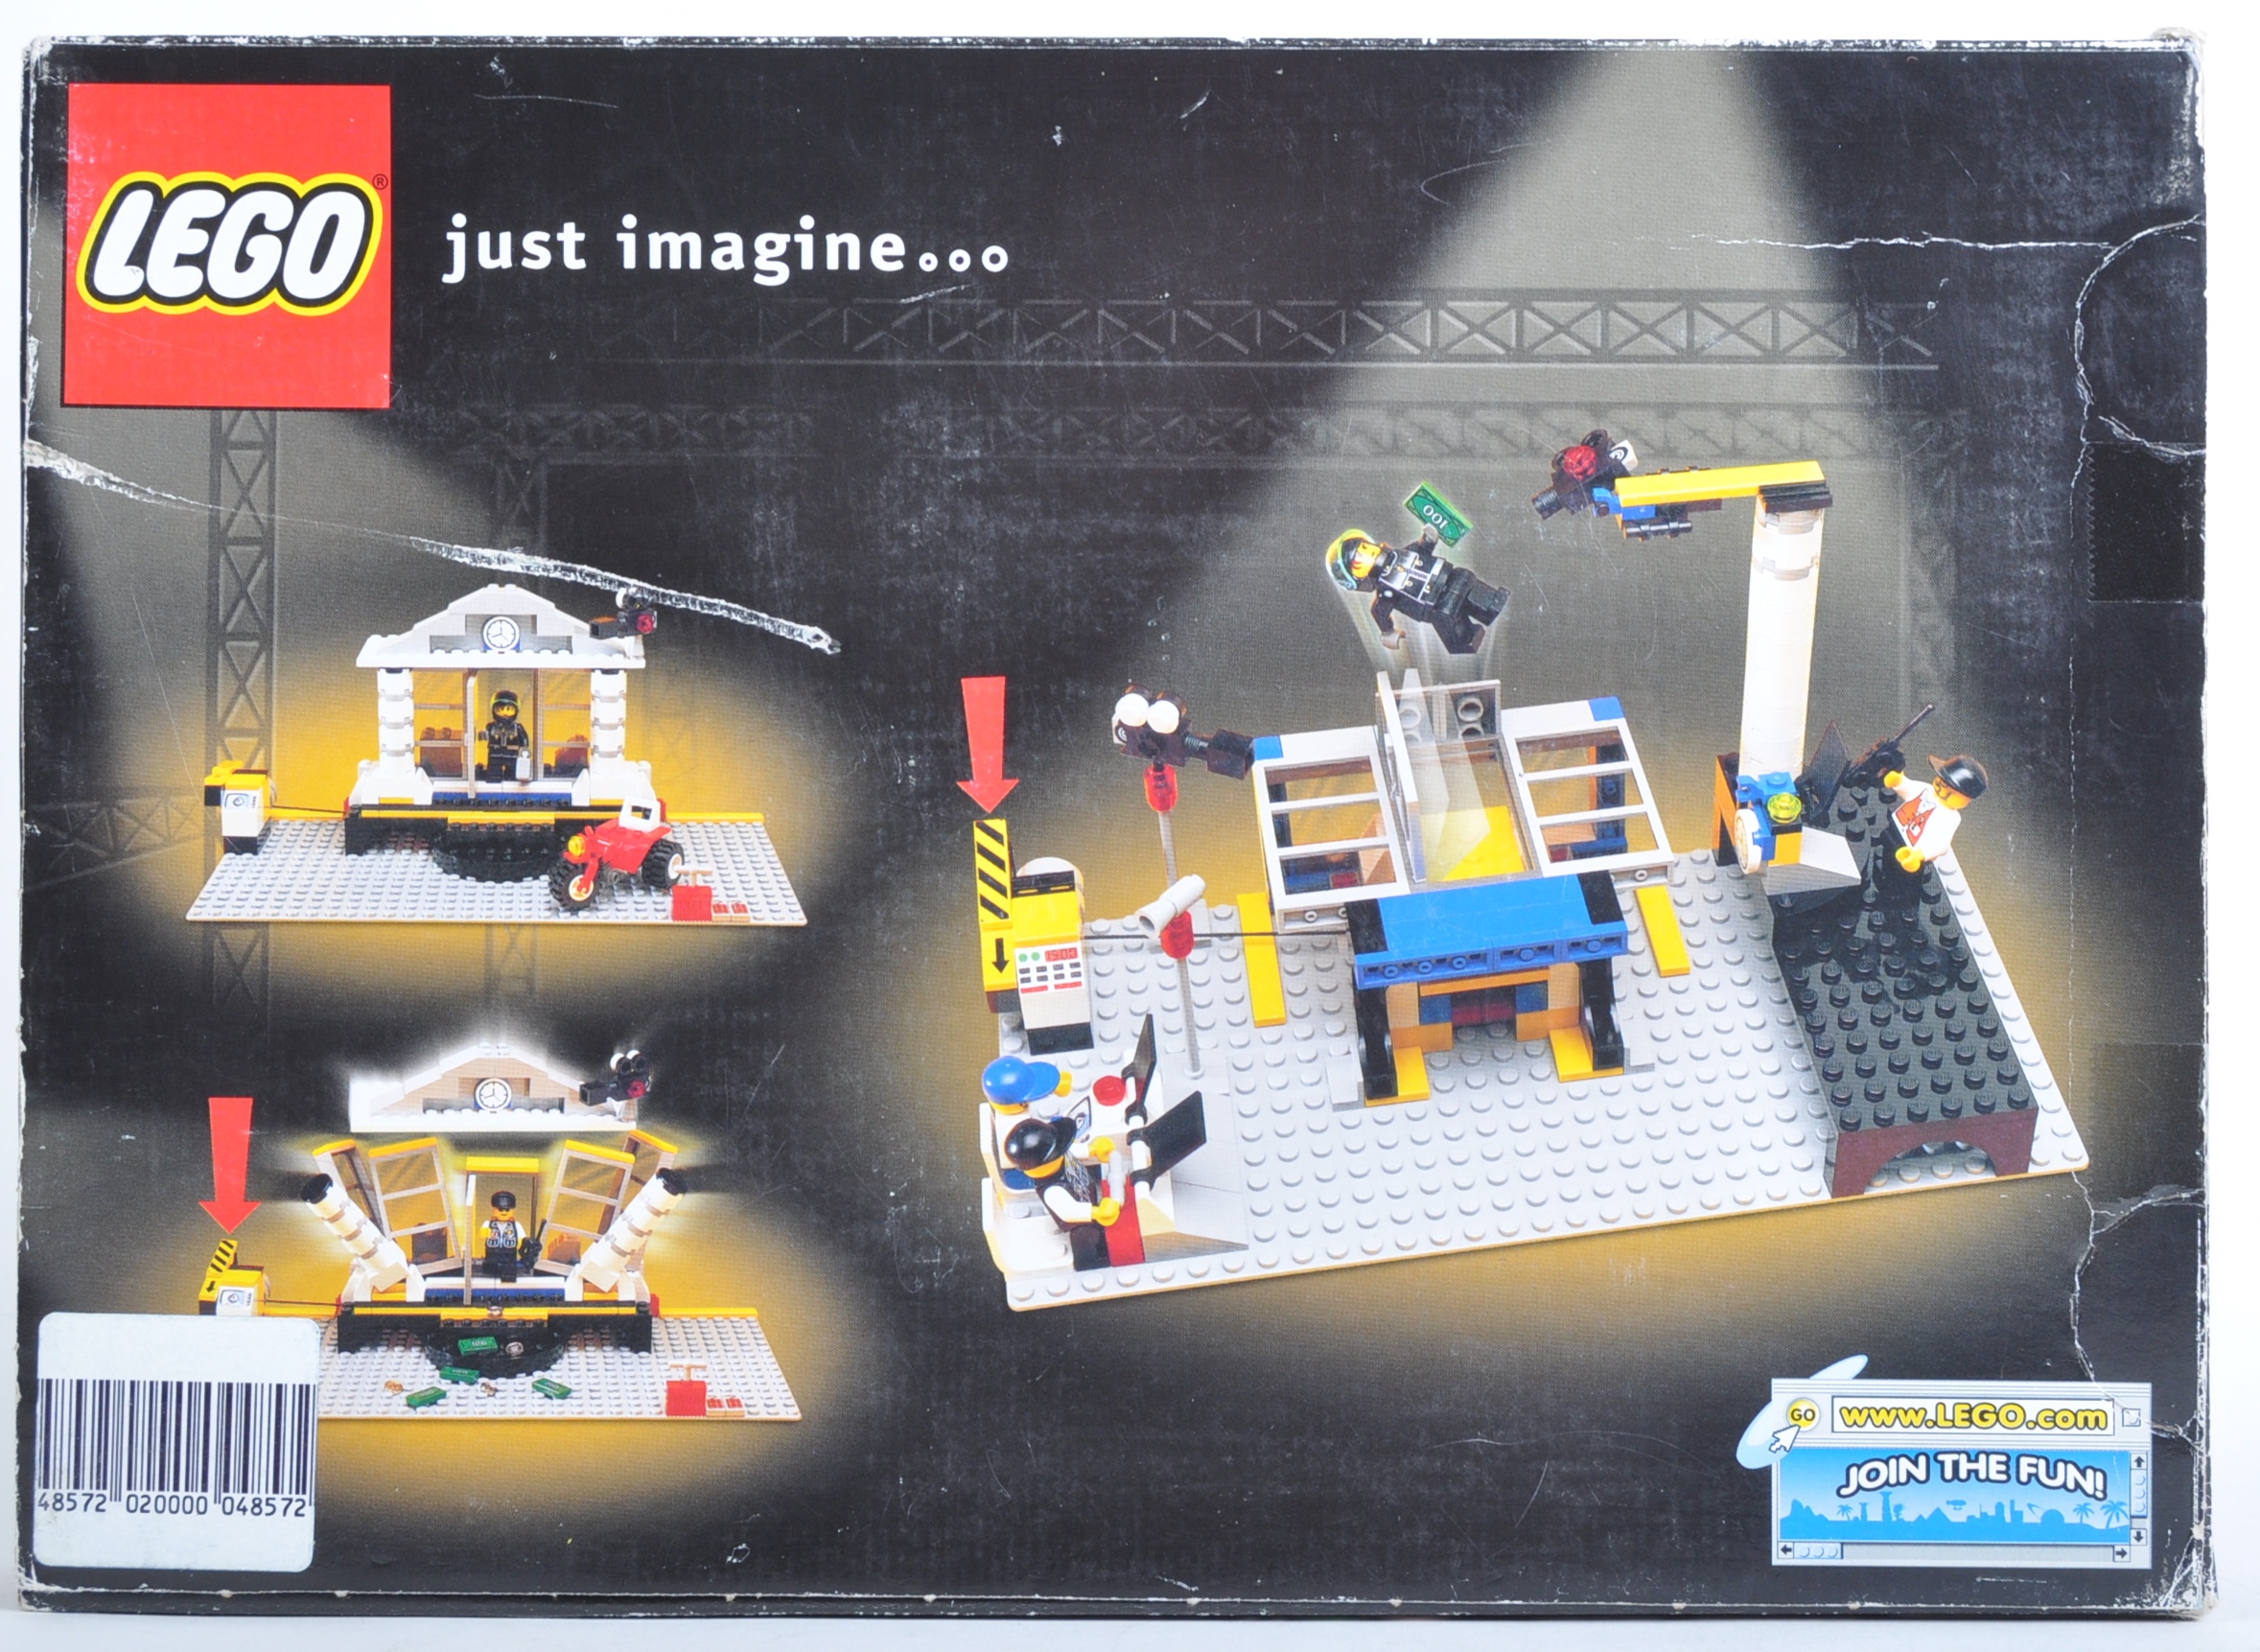 LEGO SET - LEGO STUDIOS - 1352 - EXPLOSION STUDIO - Image 2 of 4